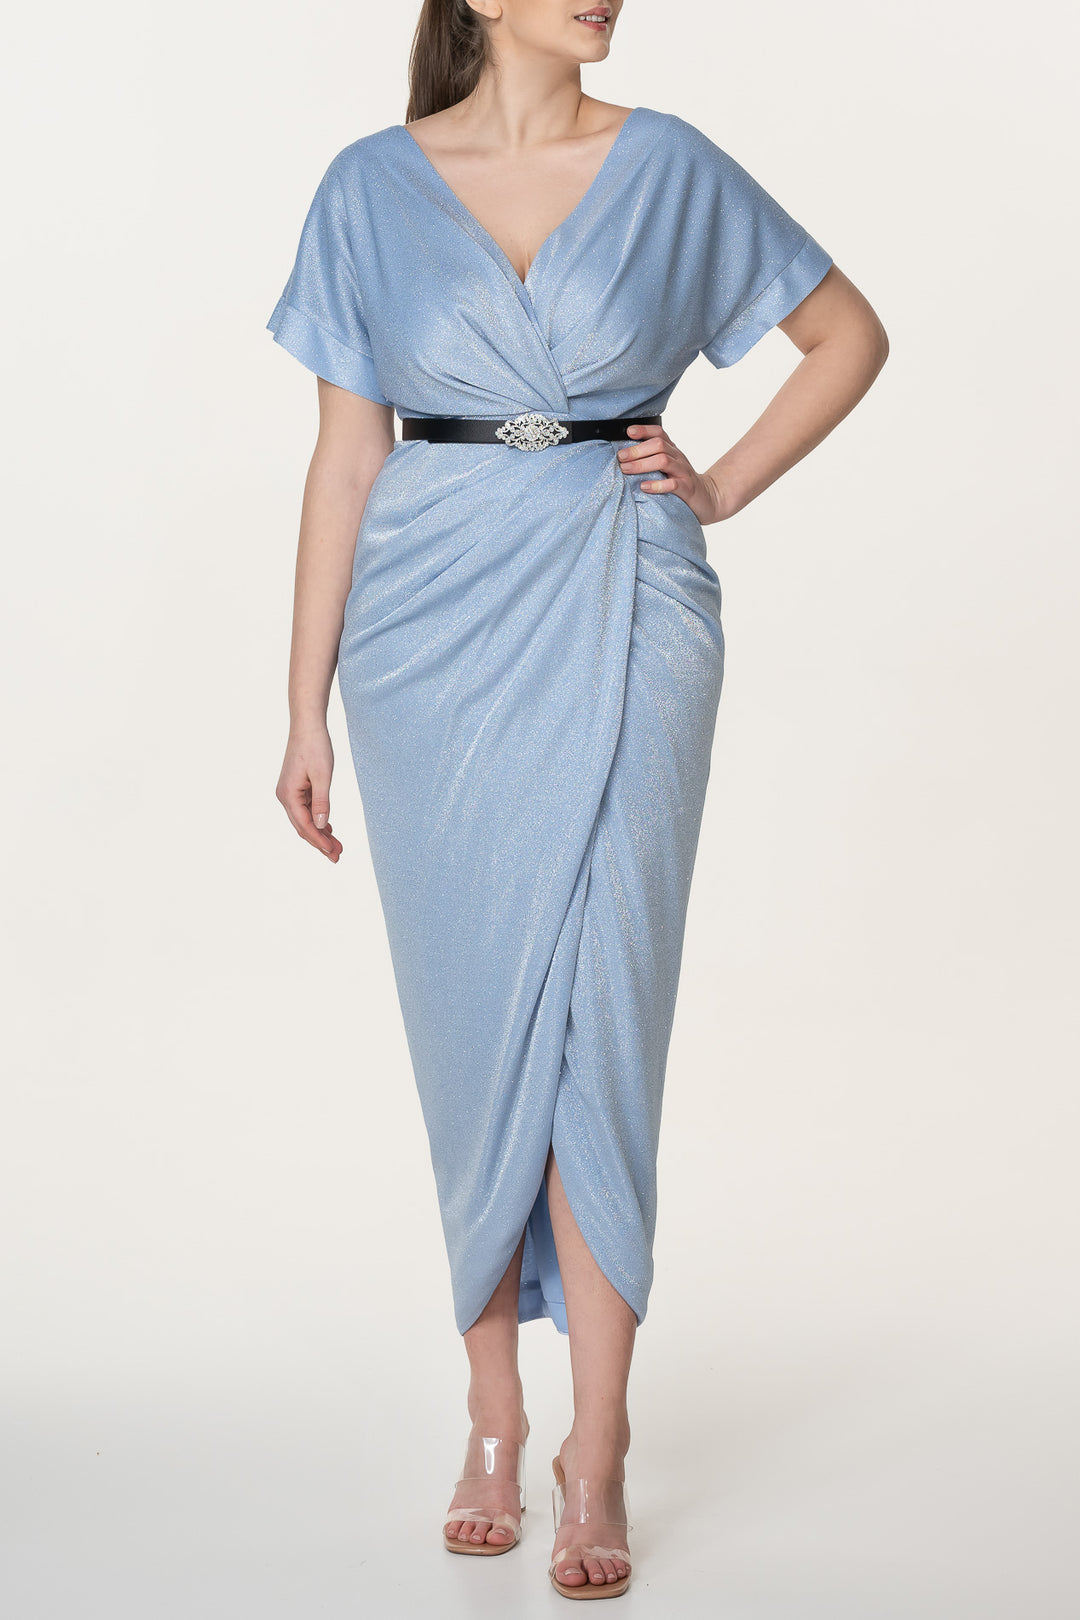 Daphne Azure Jersey Ankle Length Dress